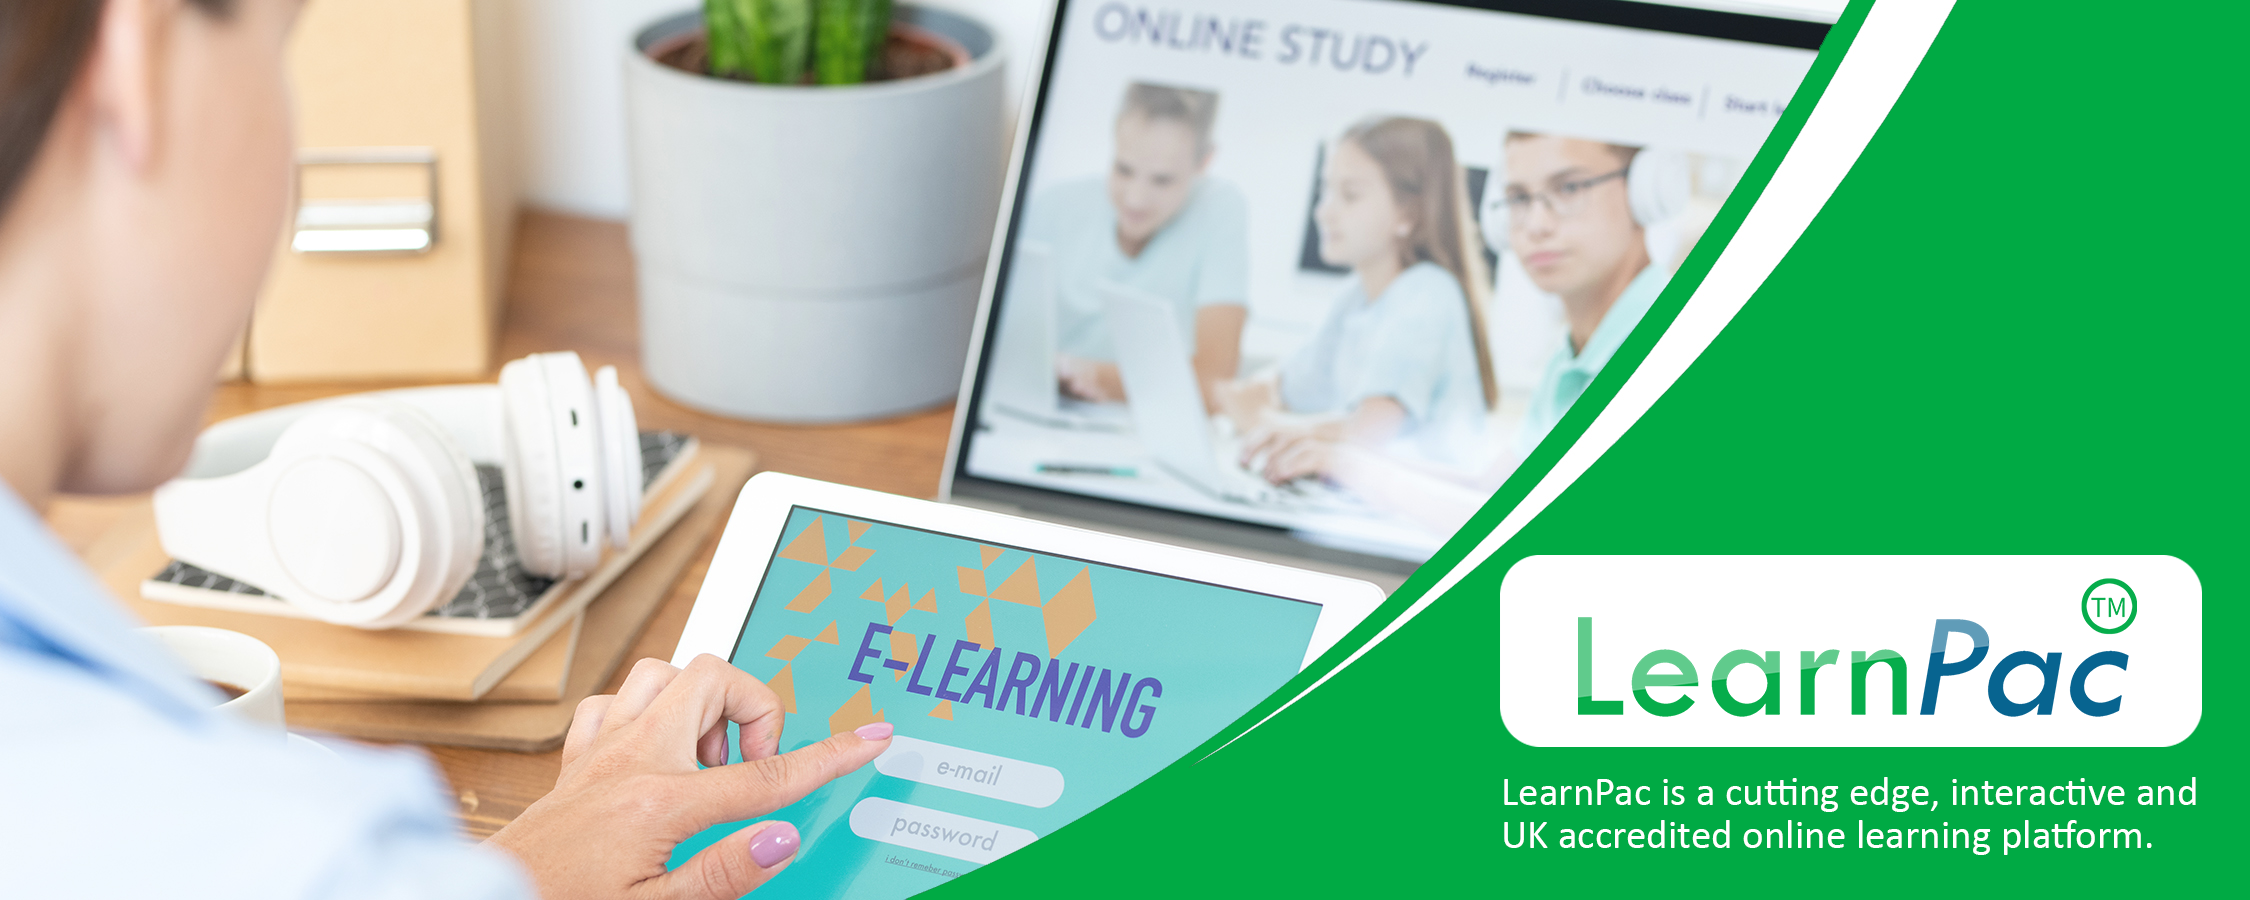 Interpersonal Skills Training - Online Learning Courses - E-Learning Courses - LearnPac Systems UK -